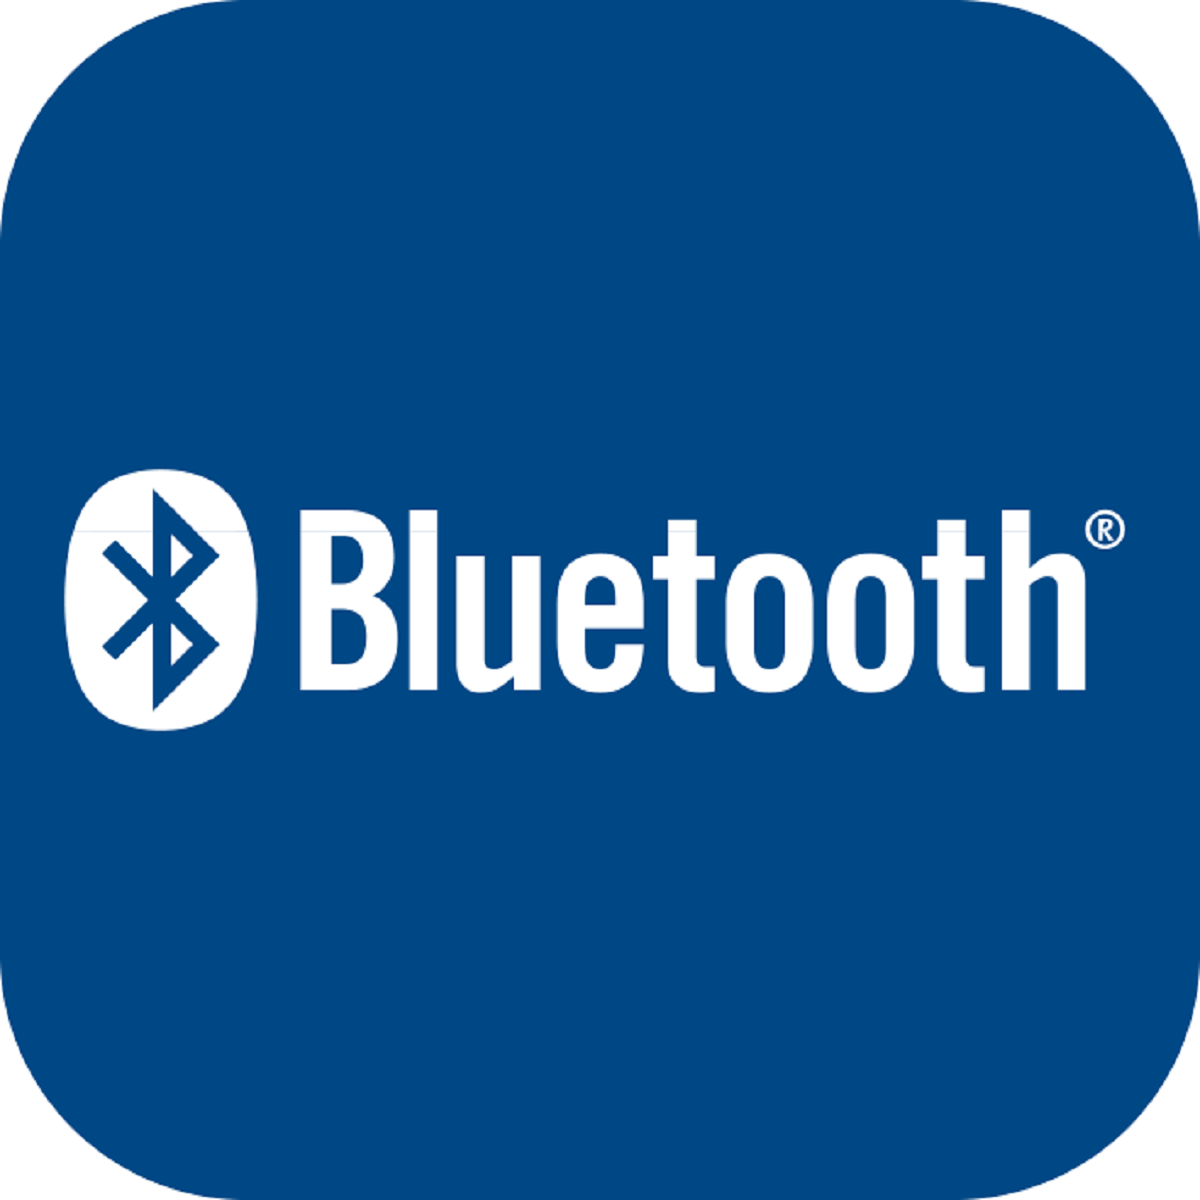 bluetooth windows 10 may 2019 update